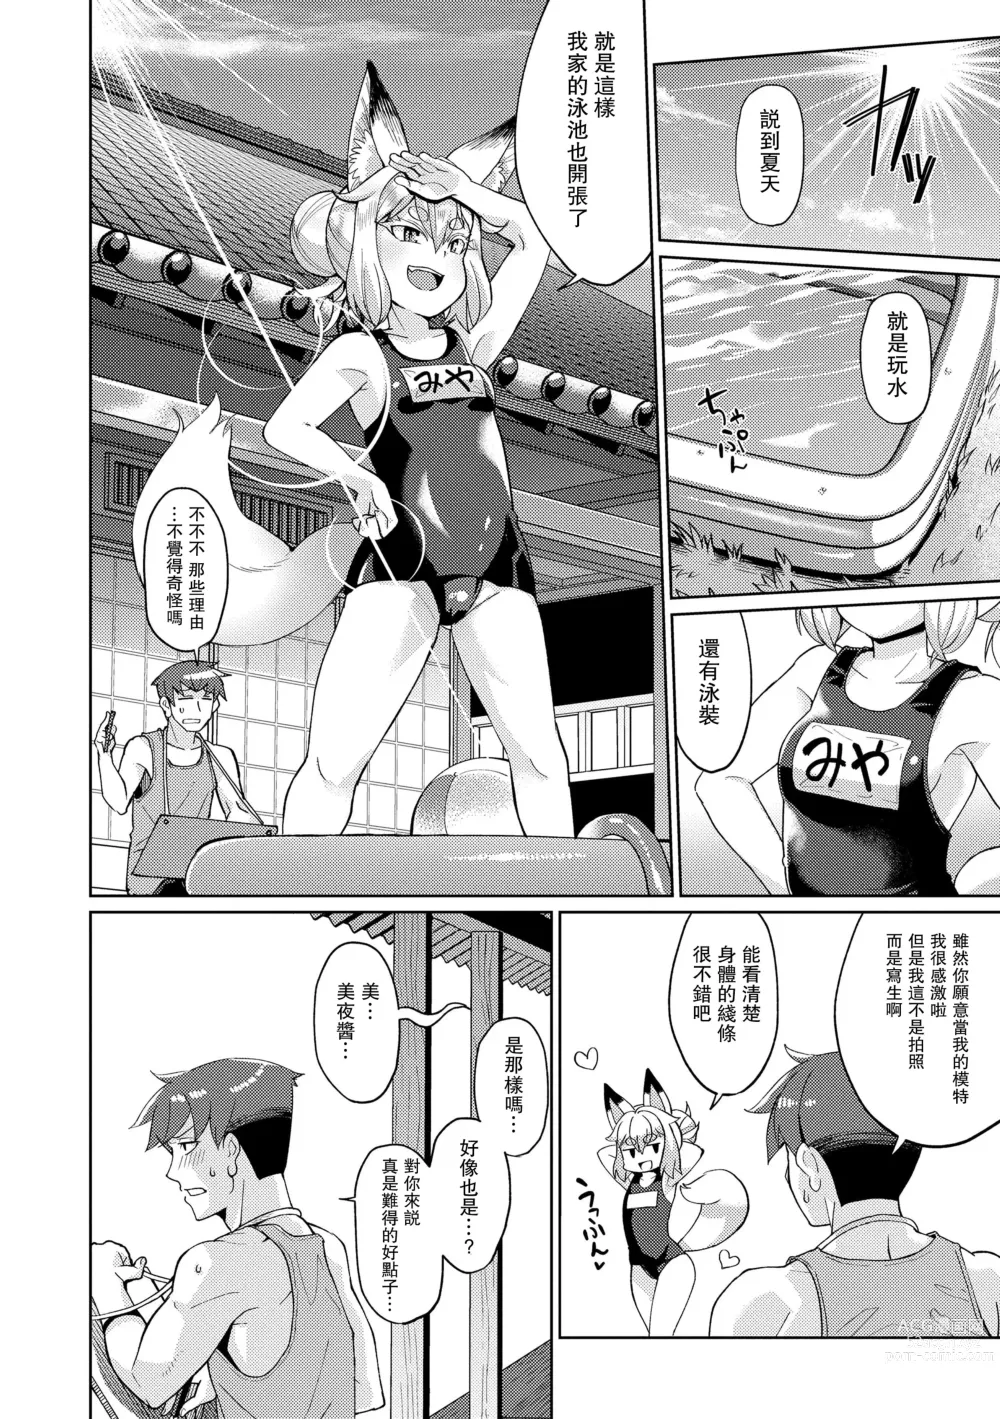 Page 4 of manga Kuon-sou no Youba-tachi Ch. 3